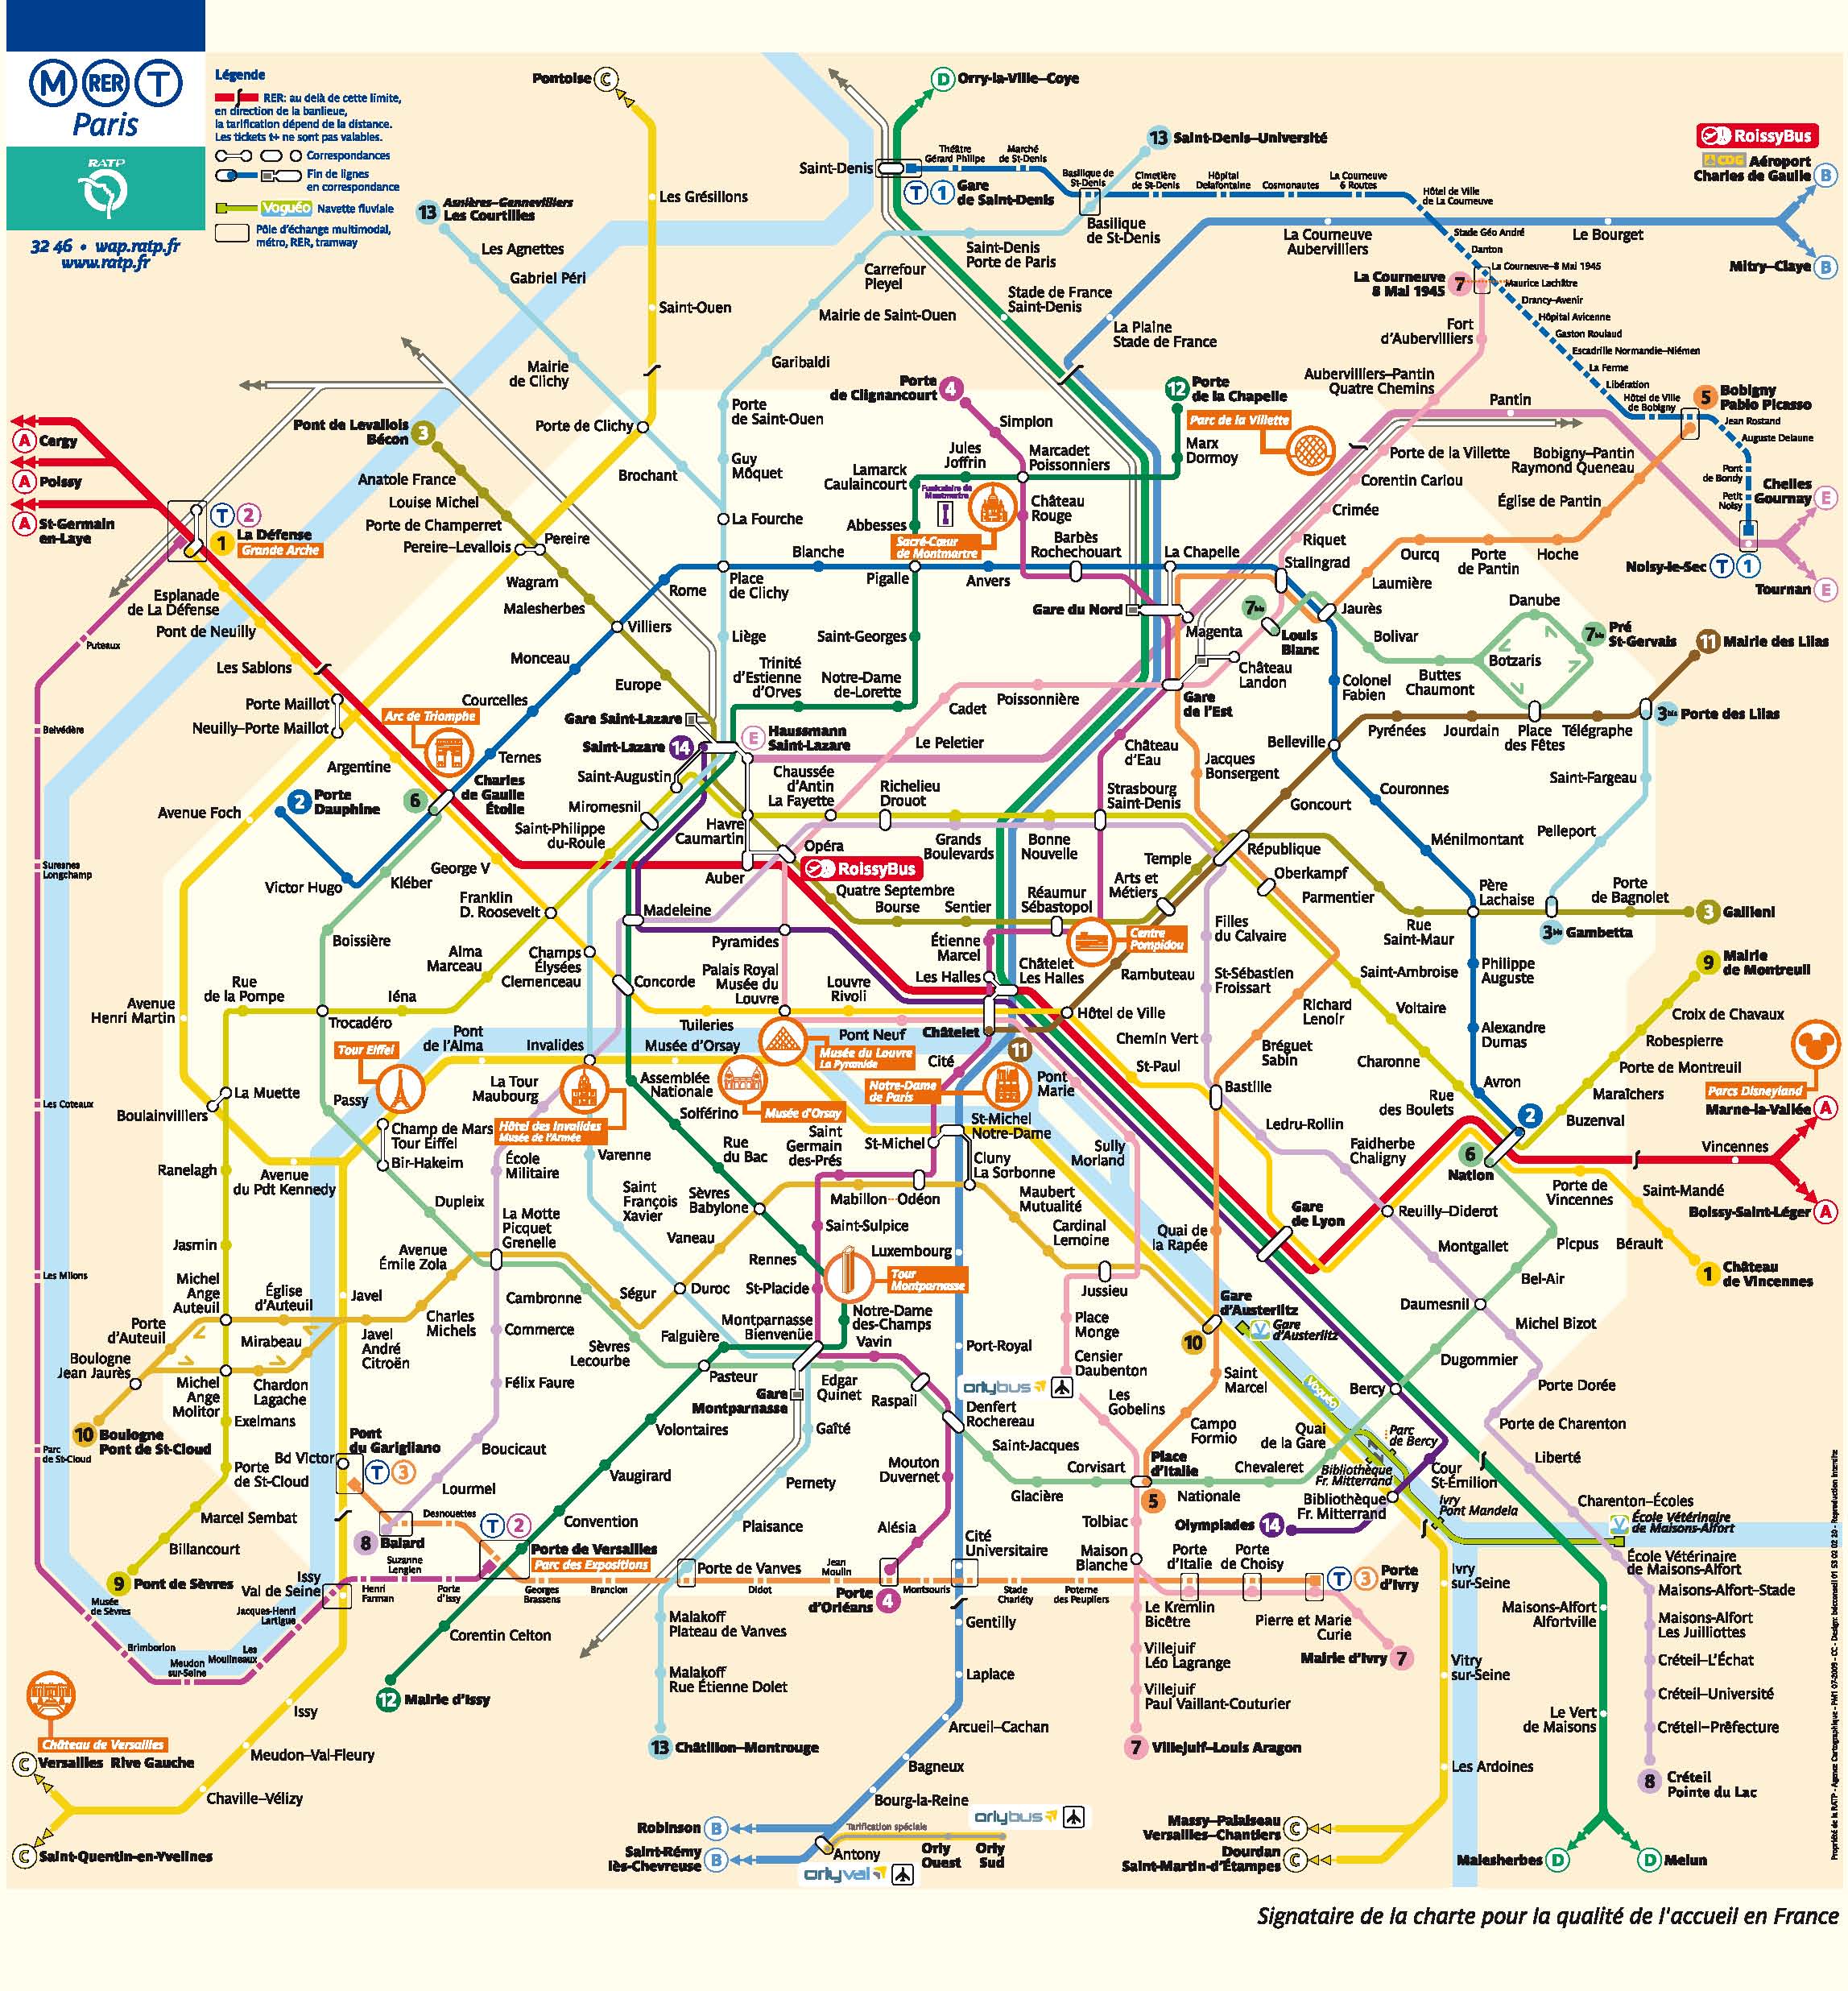 Paris Travel Zones 1 3 Map | Besttravels.org